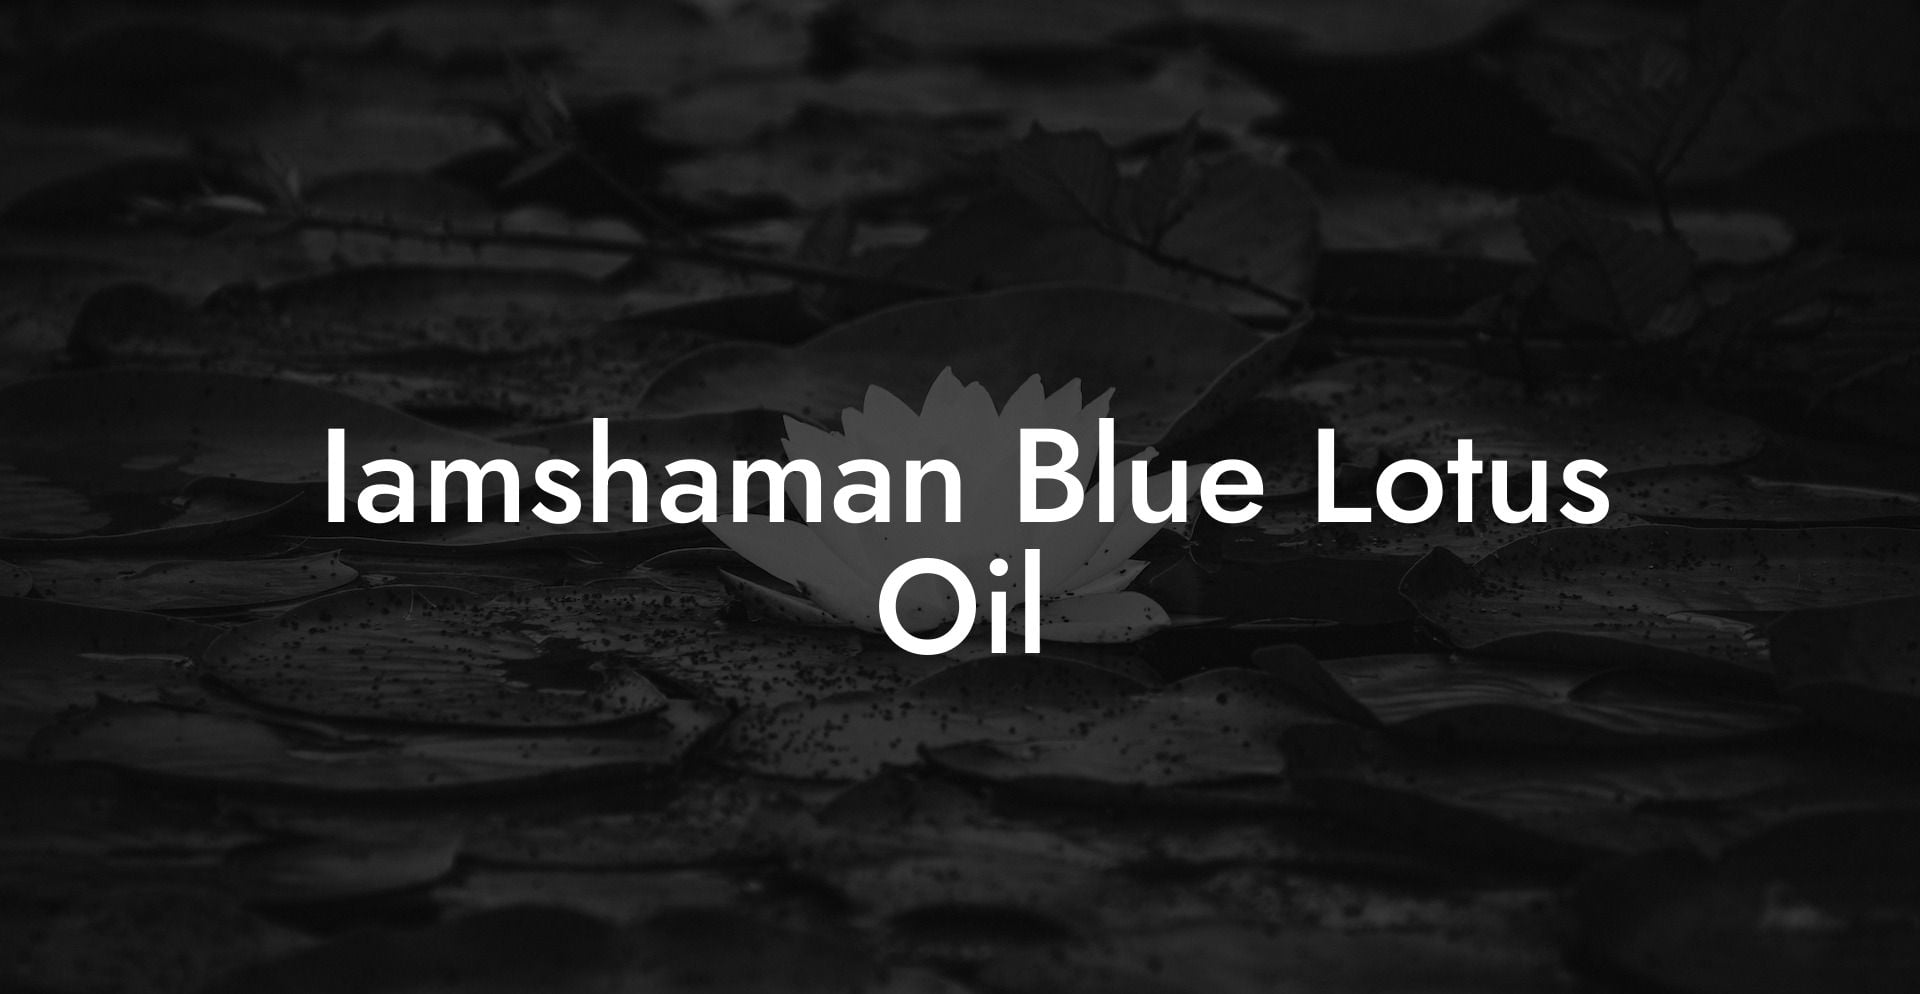 Iamshaman Blue Lotus Oil